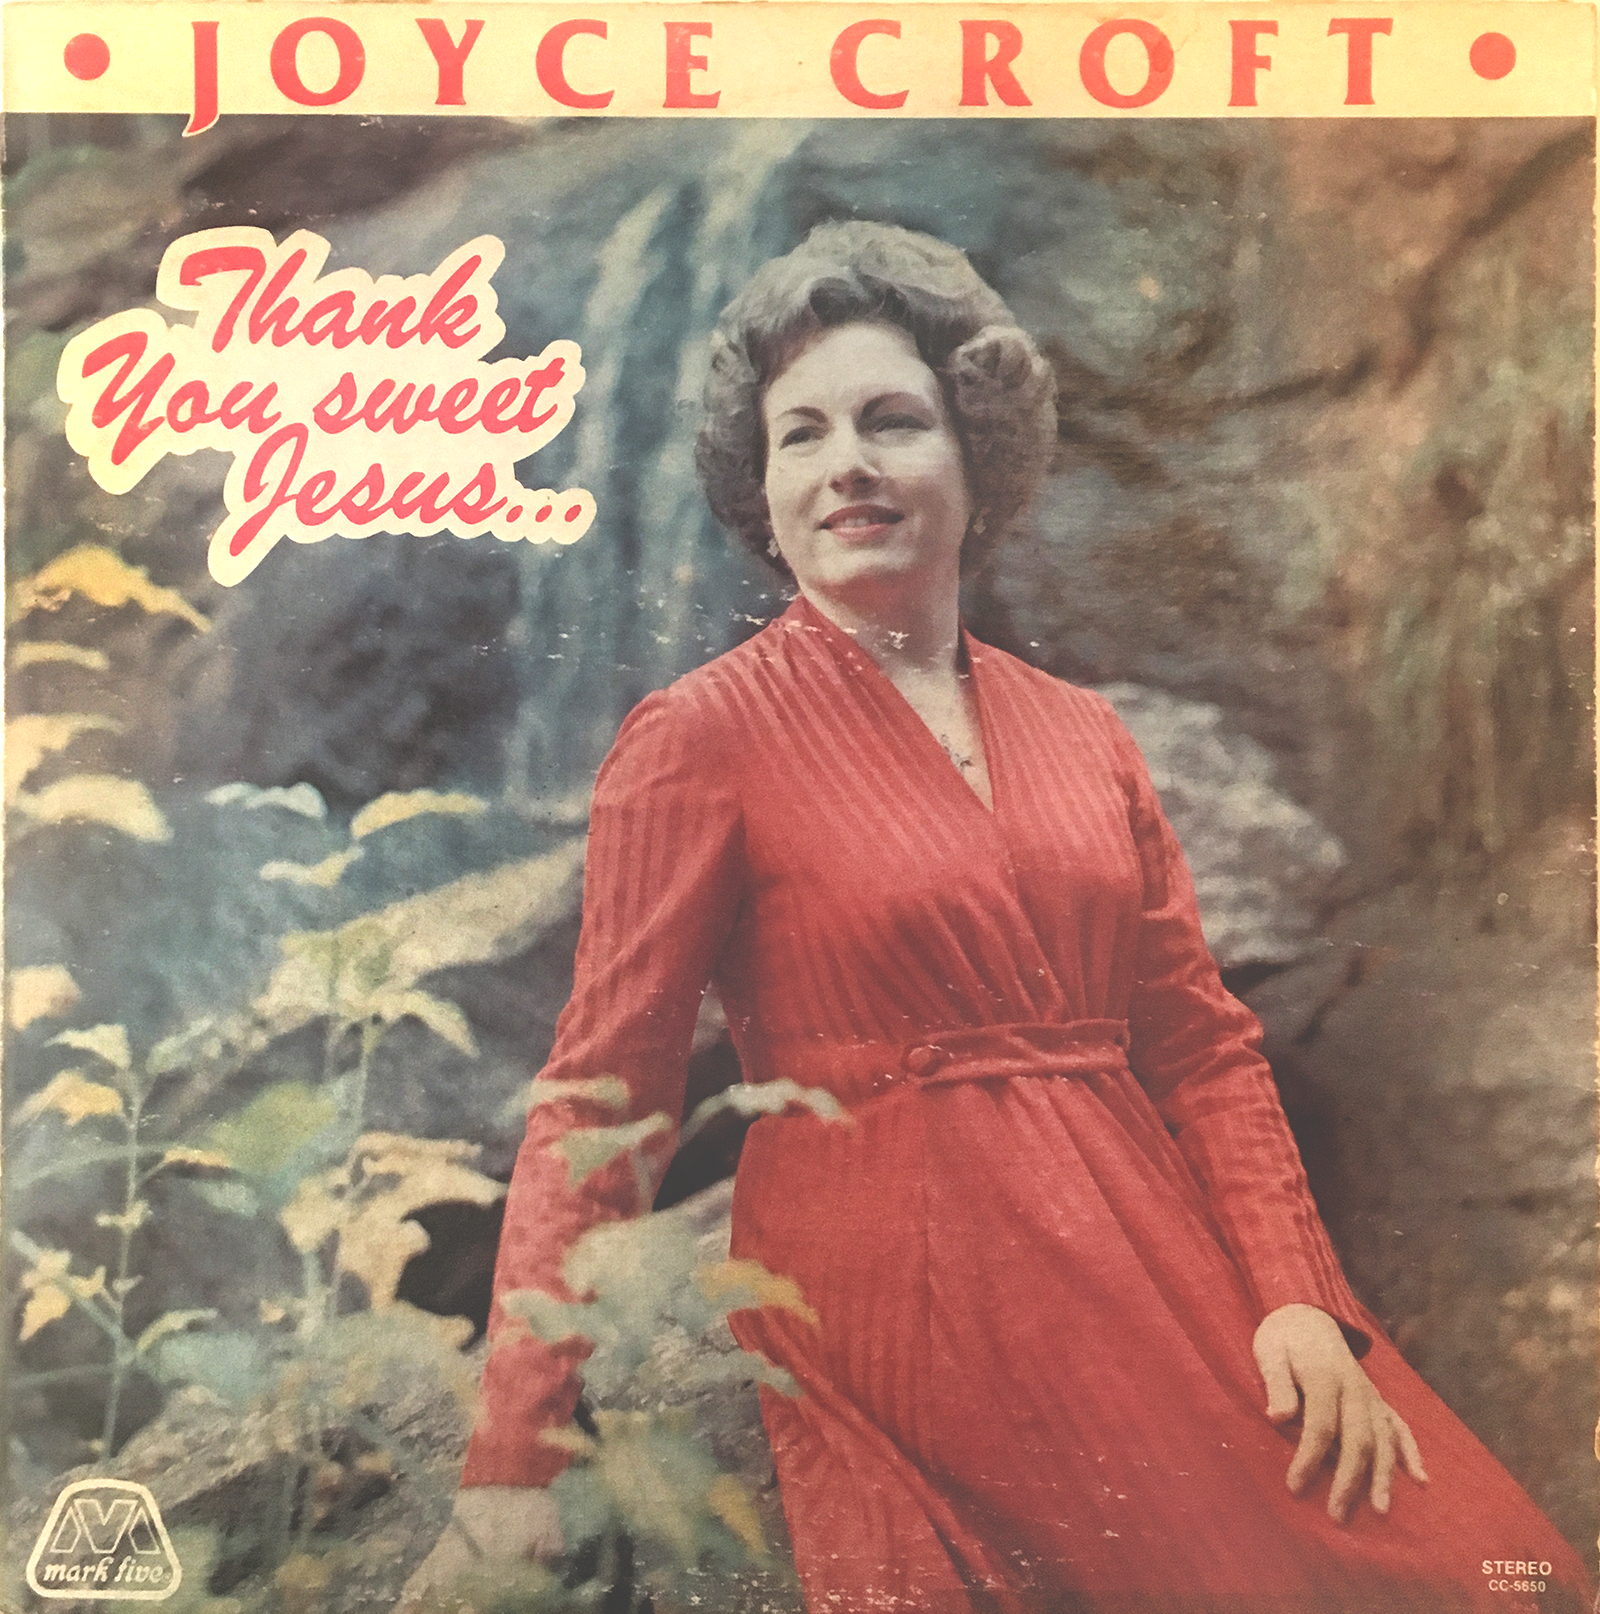 Joyce Croft